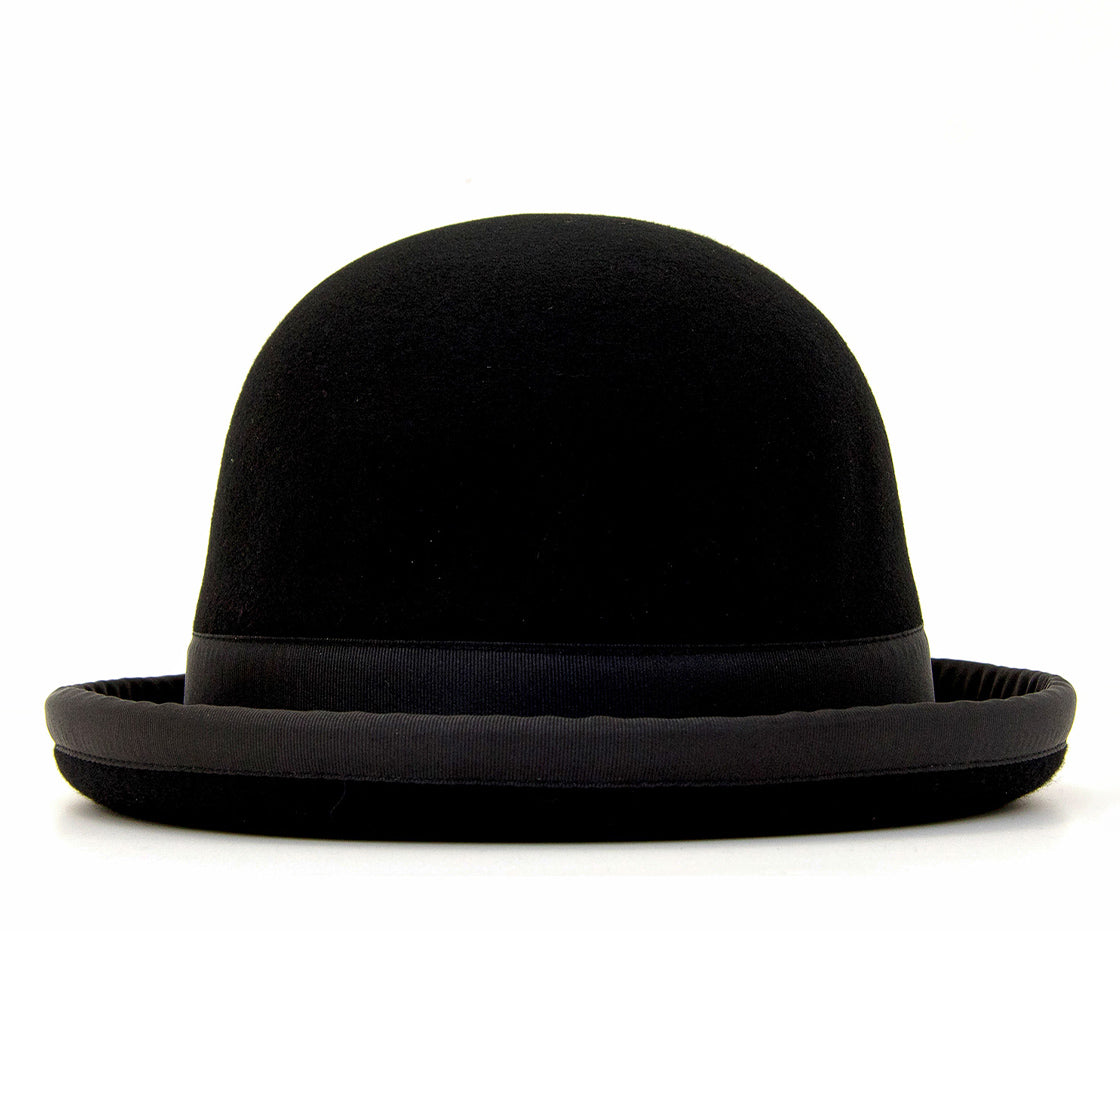 Black Tumbler Juggling Bowler Hat from side